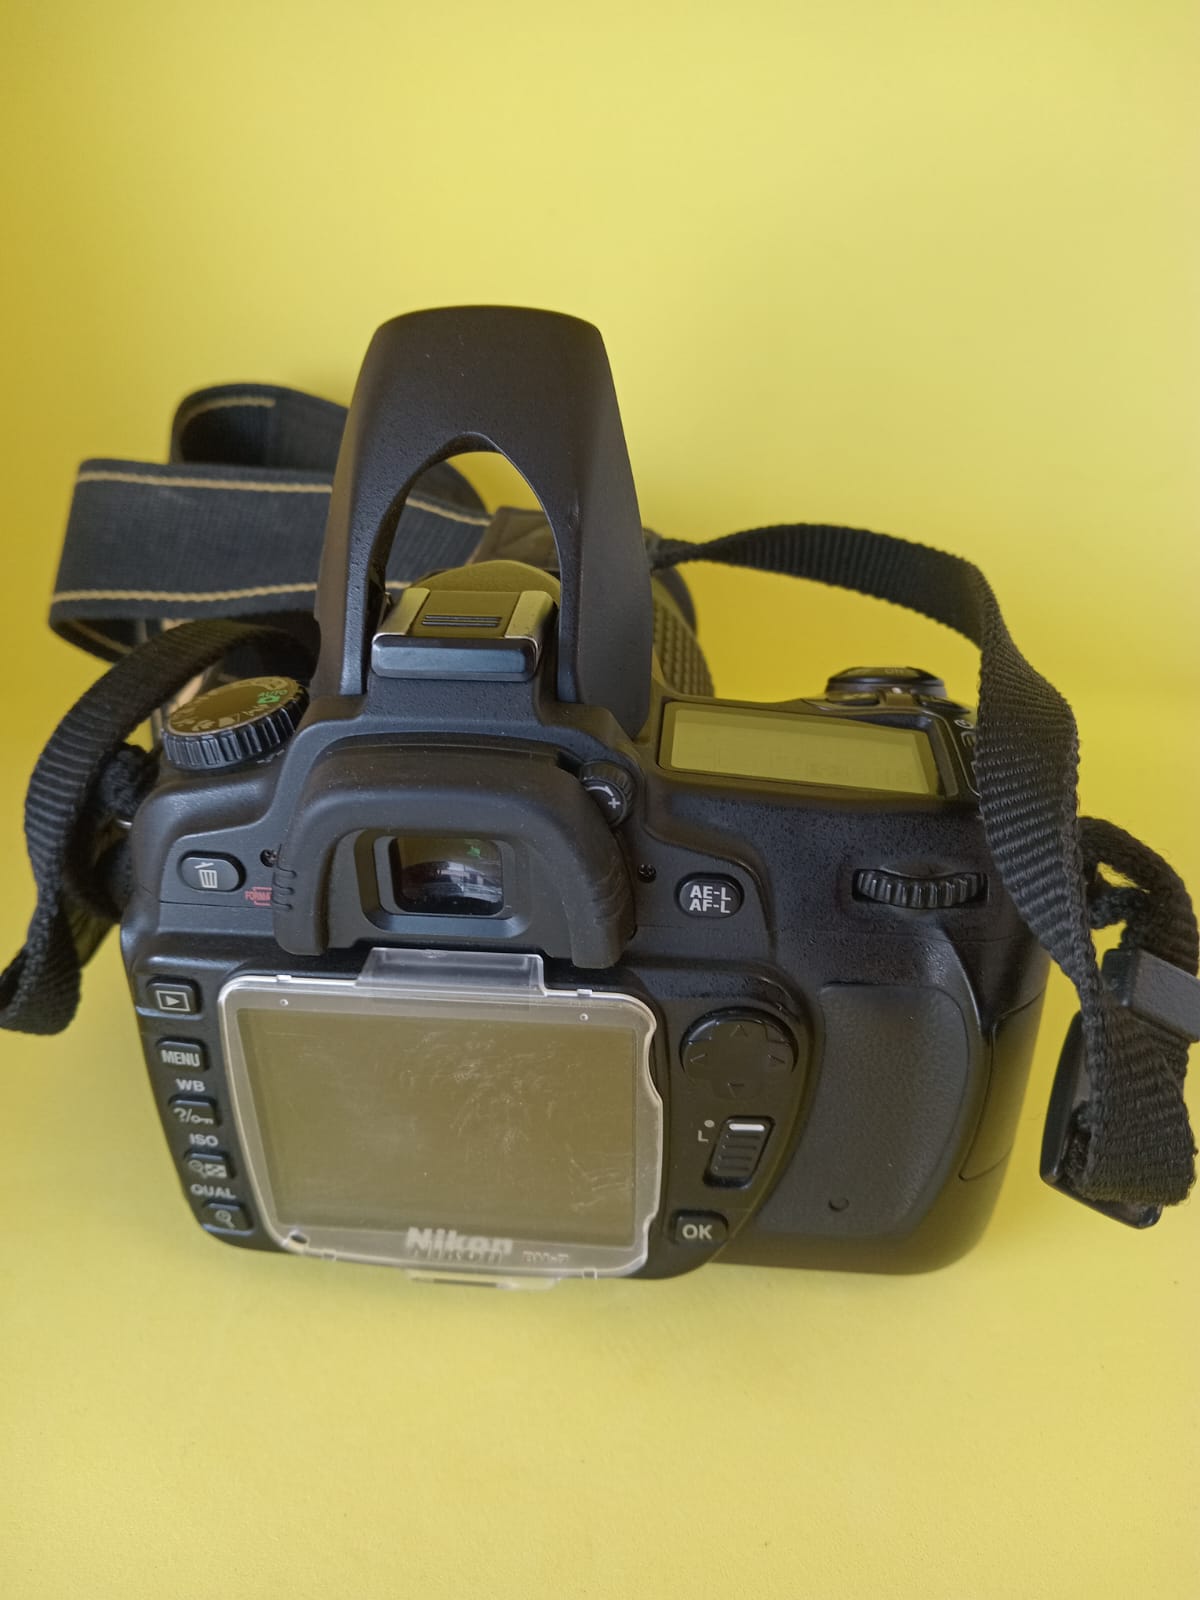 NIKON D80 with lens 55-200mm